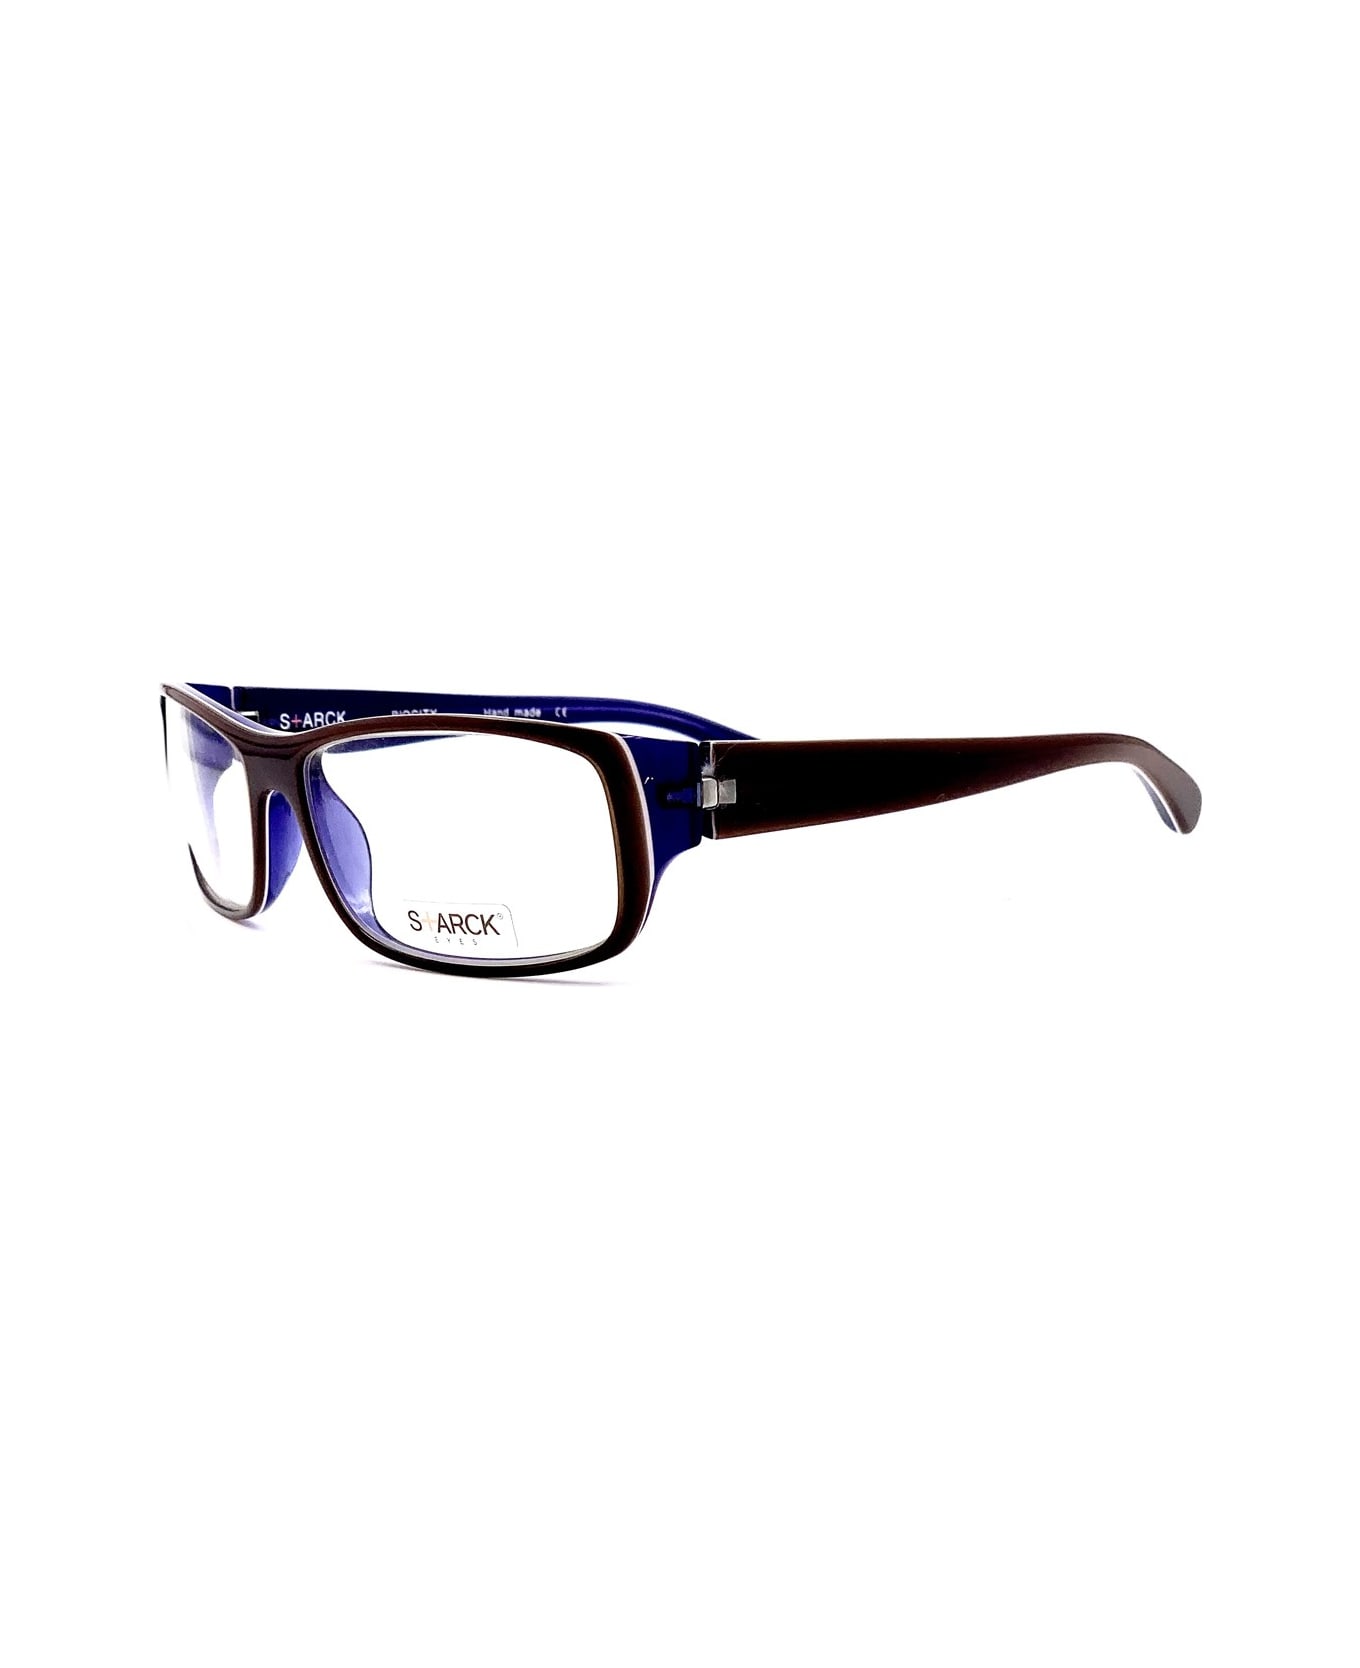 Philippe Starck P0605 Glasses - Nero